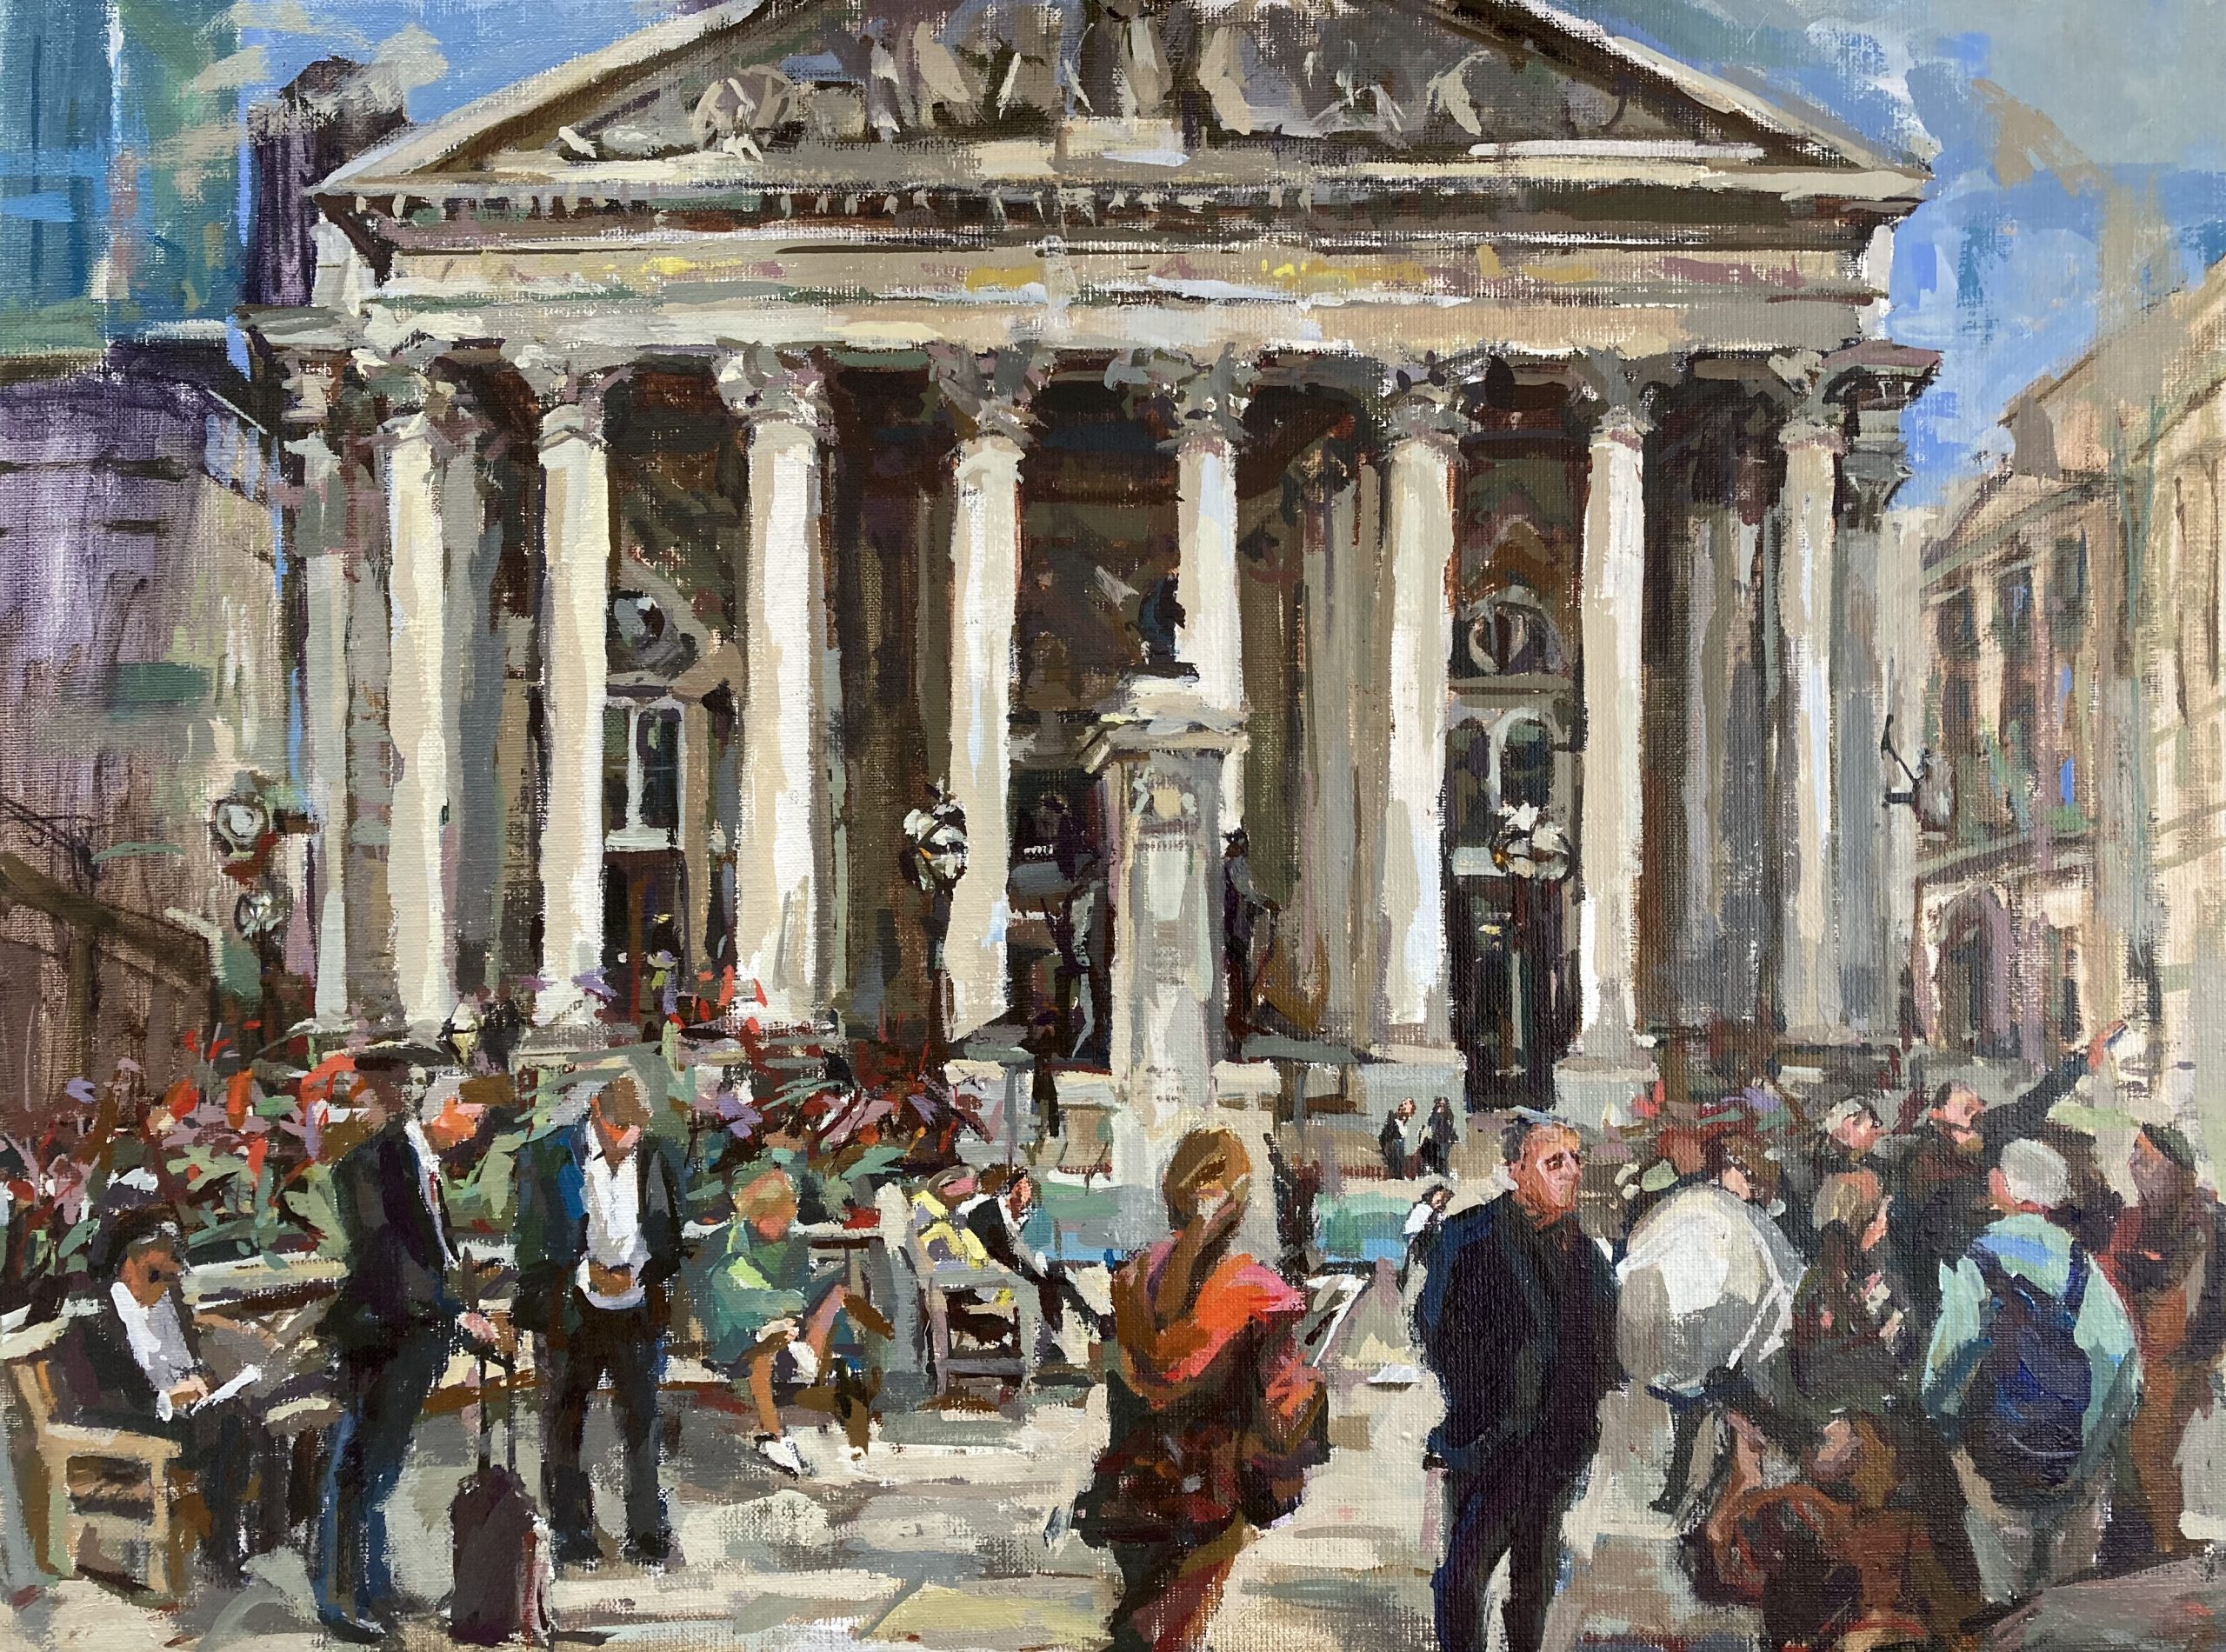 Finished Royal Exchange, Oil on canvas, 2022. 45.7cm x 61cm